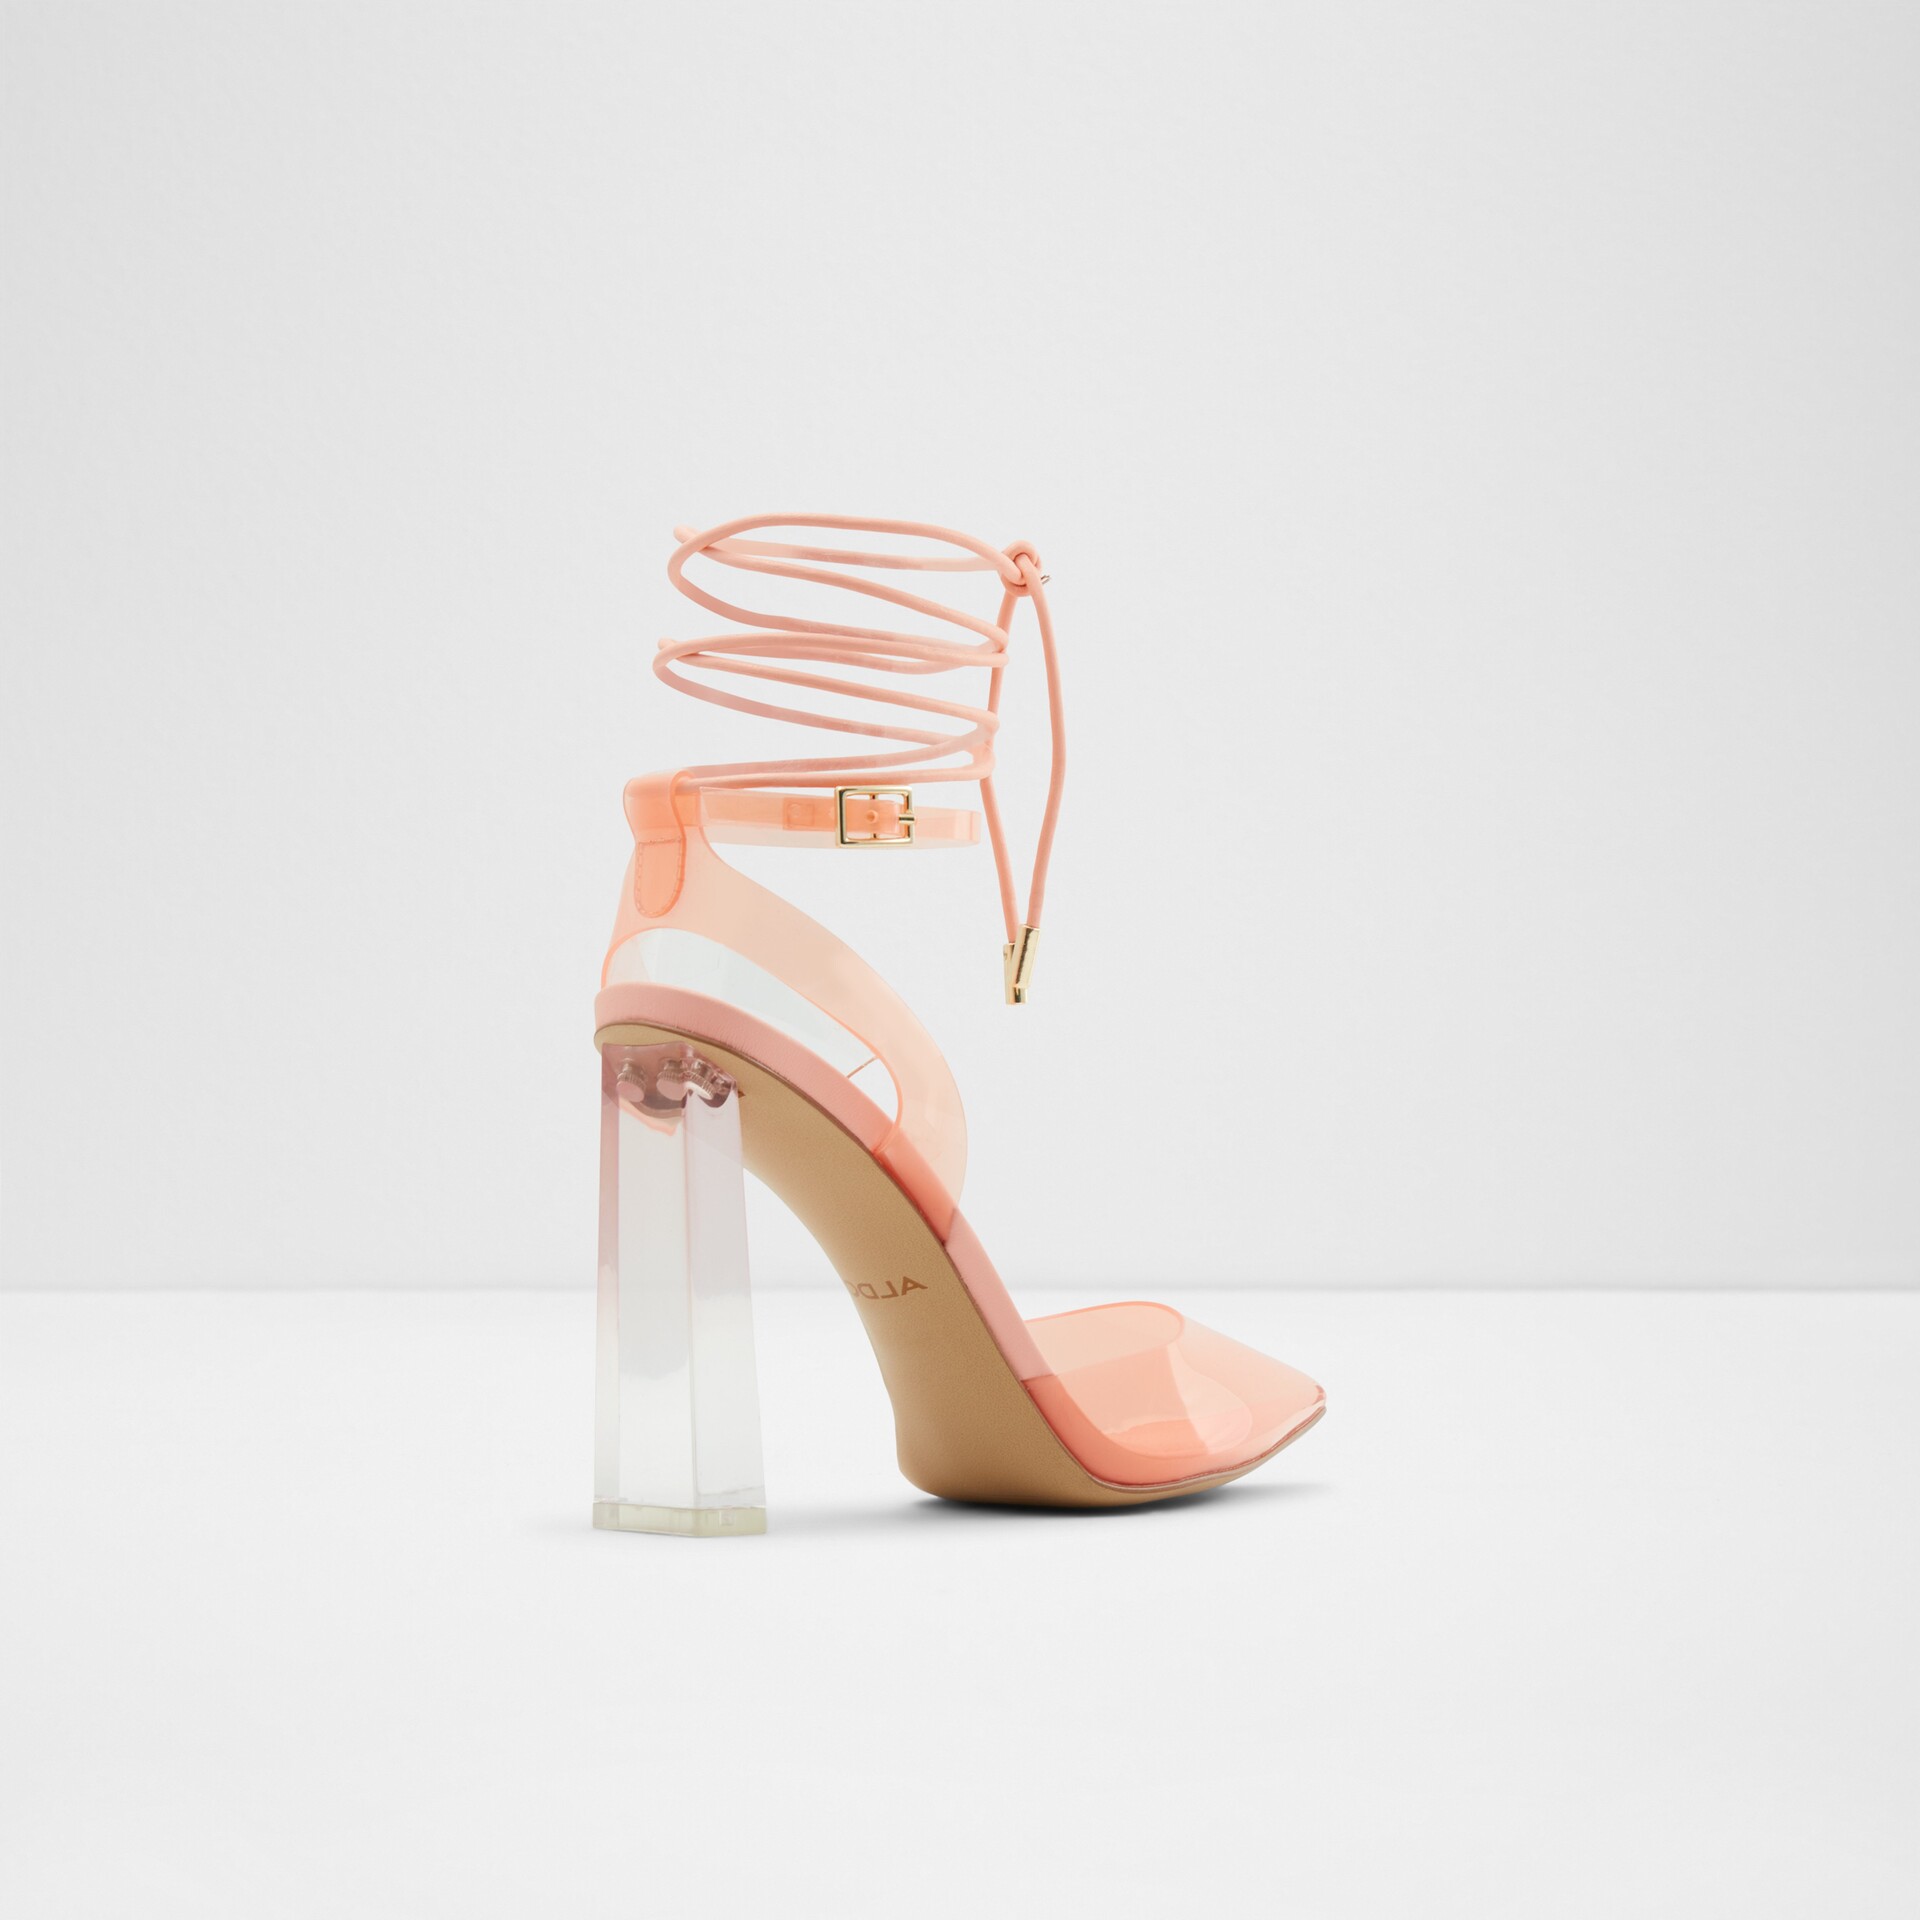 Zapatos de salón mujer en coral 830002020 | ALDO Shoes España